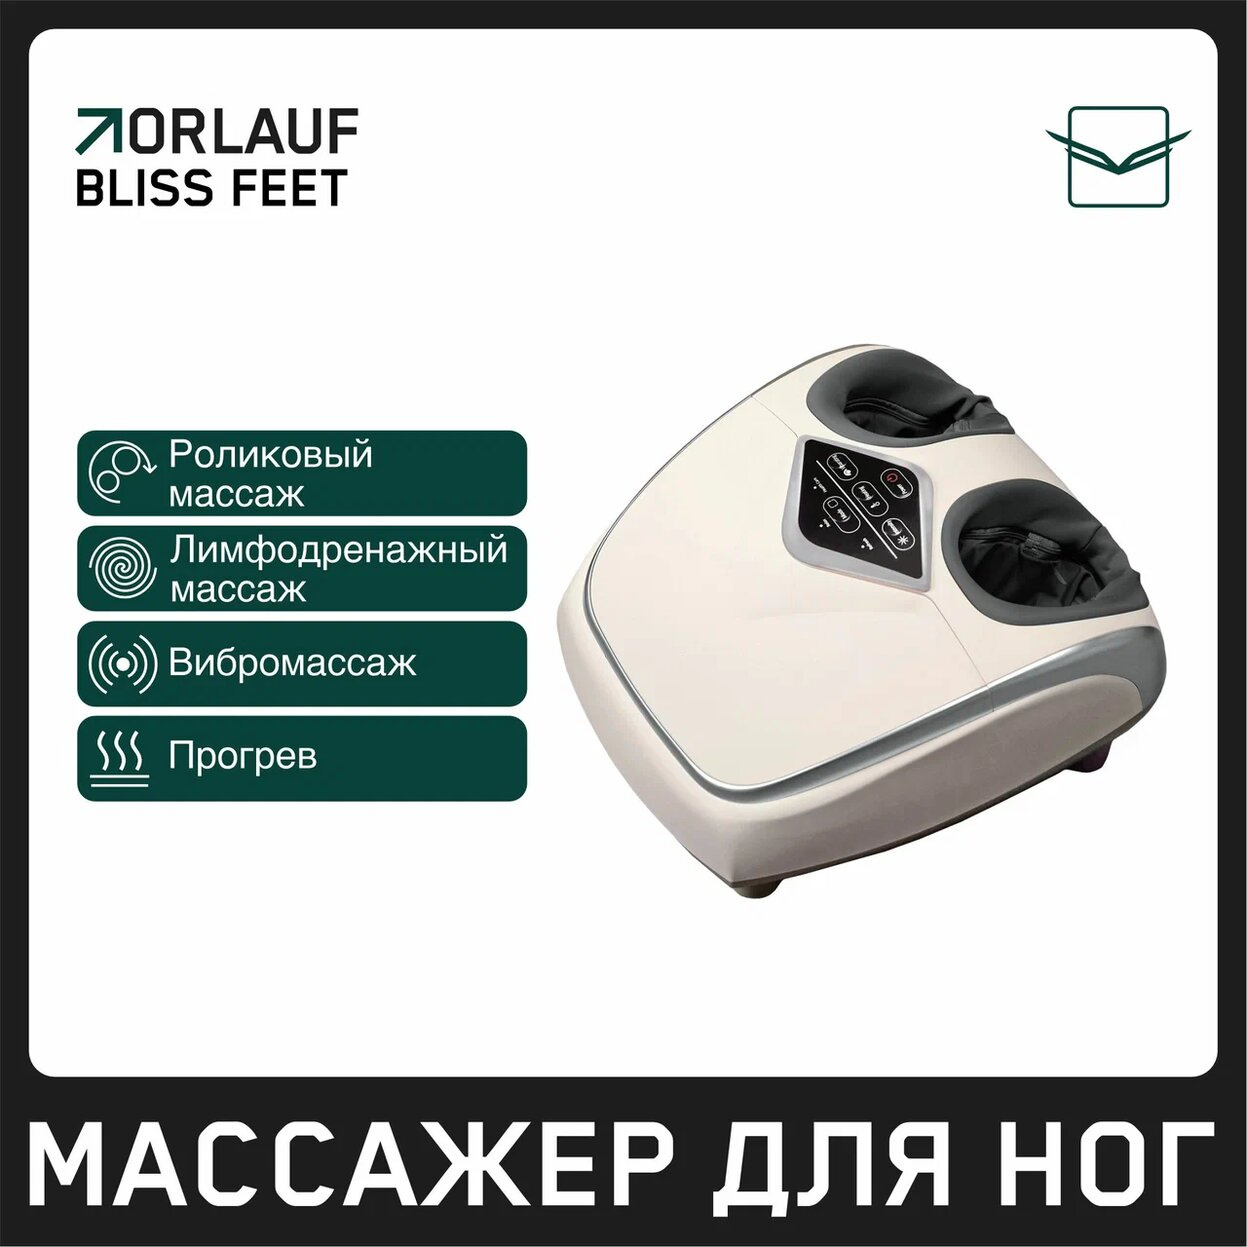 Orlauf Bliss Feet из каталога устройств для массажа в Казани по цене 27600 ₽